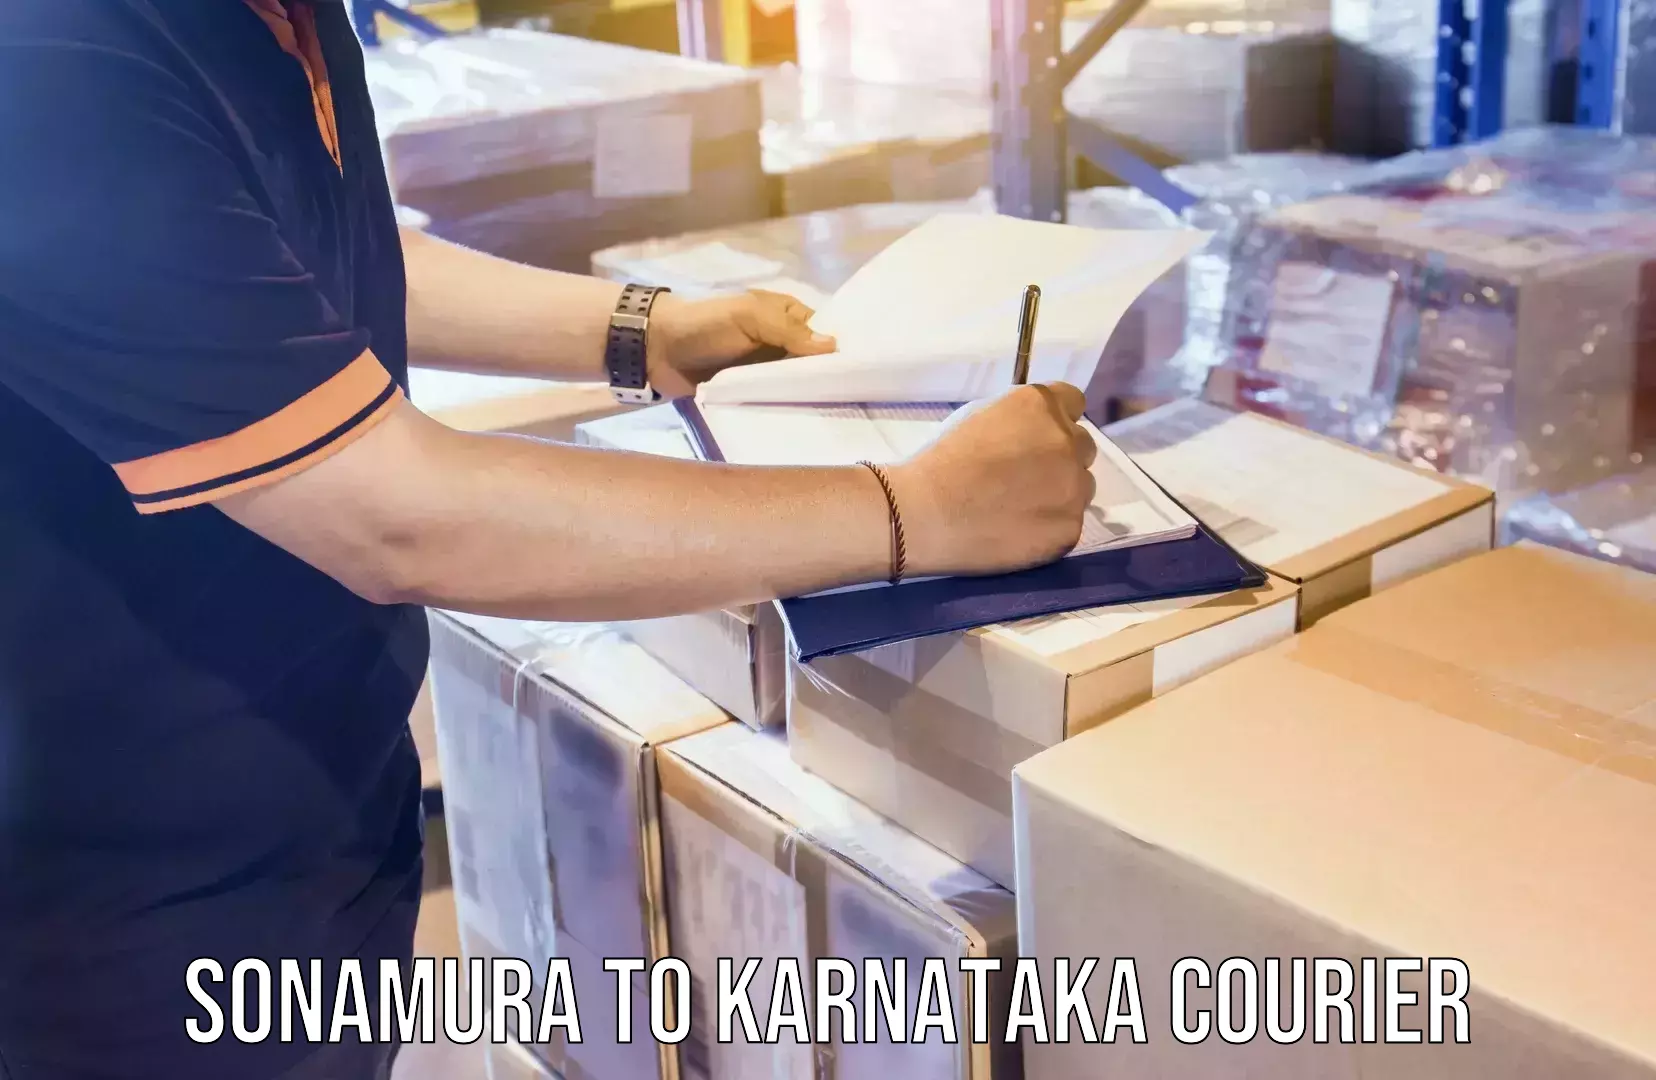 Easy return solutions Sonamura to Karnataka